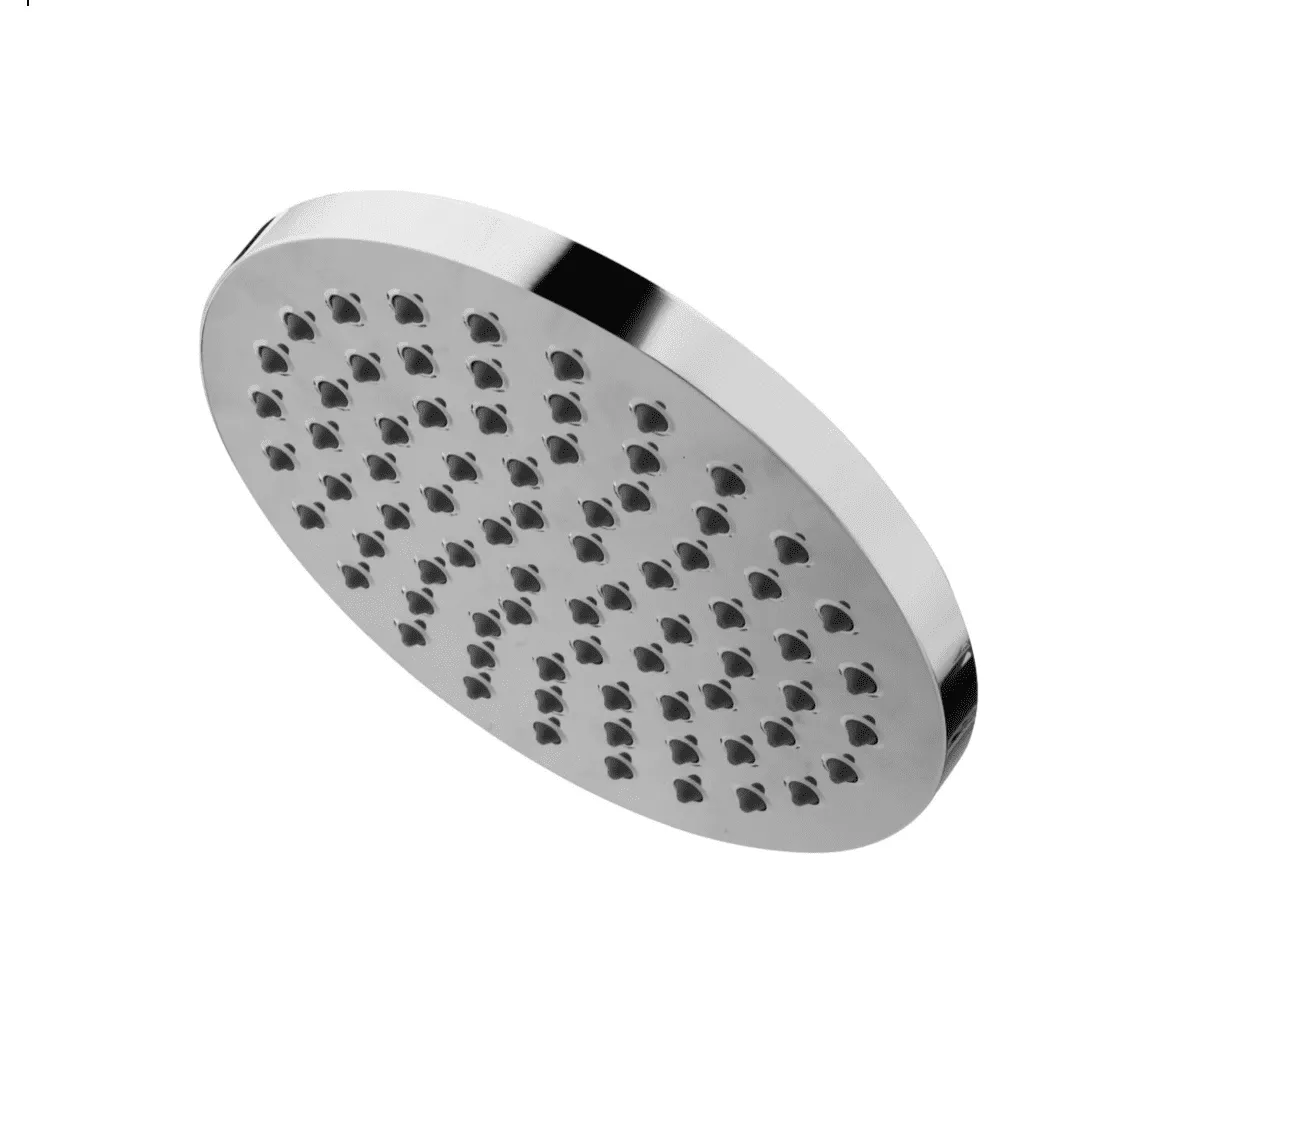 Goeka Rain shower- Galaxy rain shower head mirror finish for spa experience in bathroom at lowest price